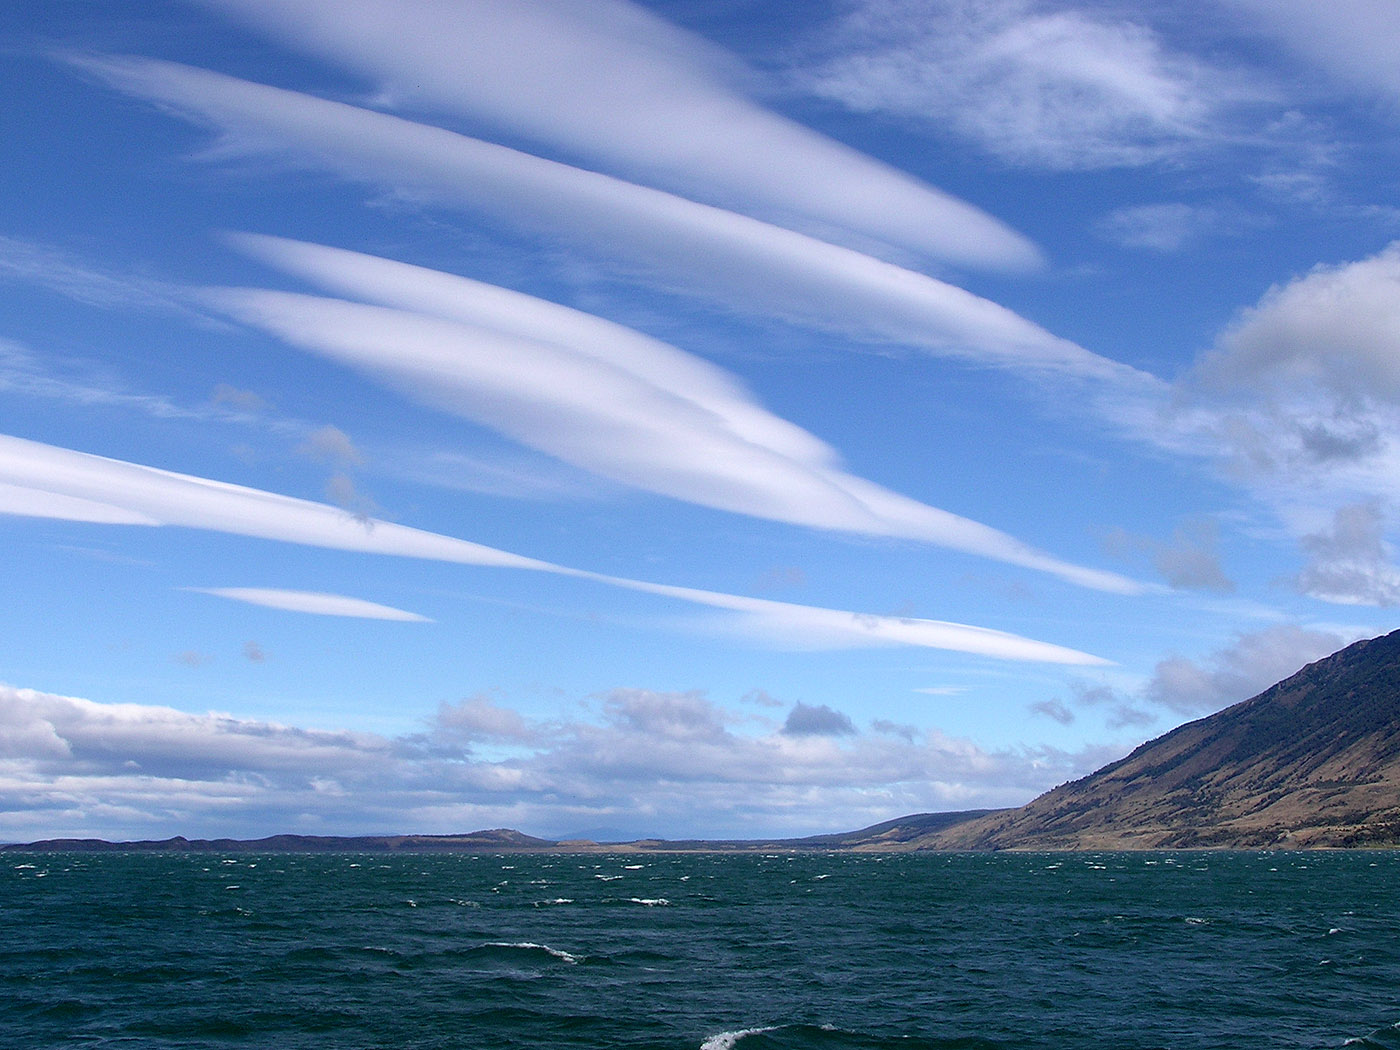 Sky near Puerto Natales, Chile